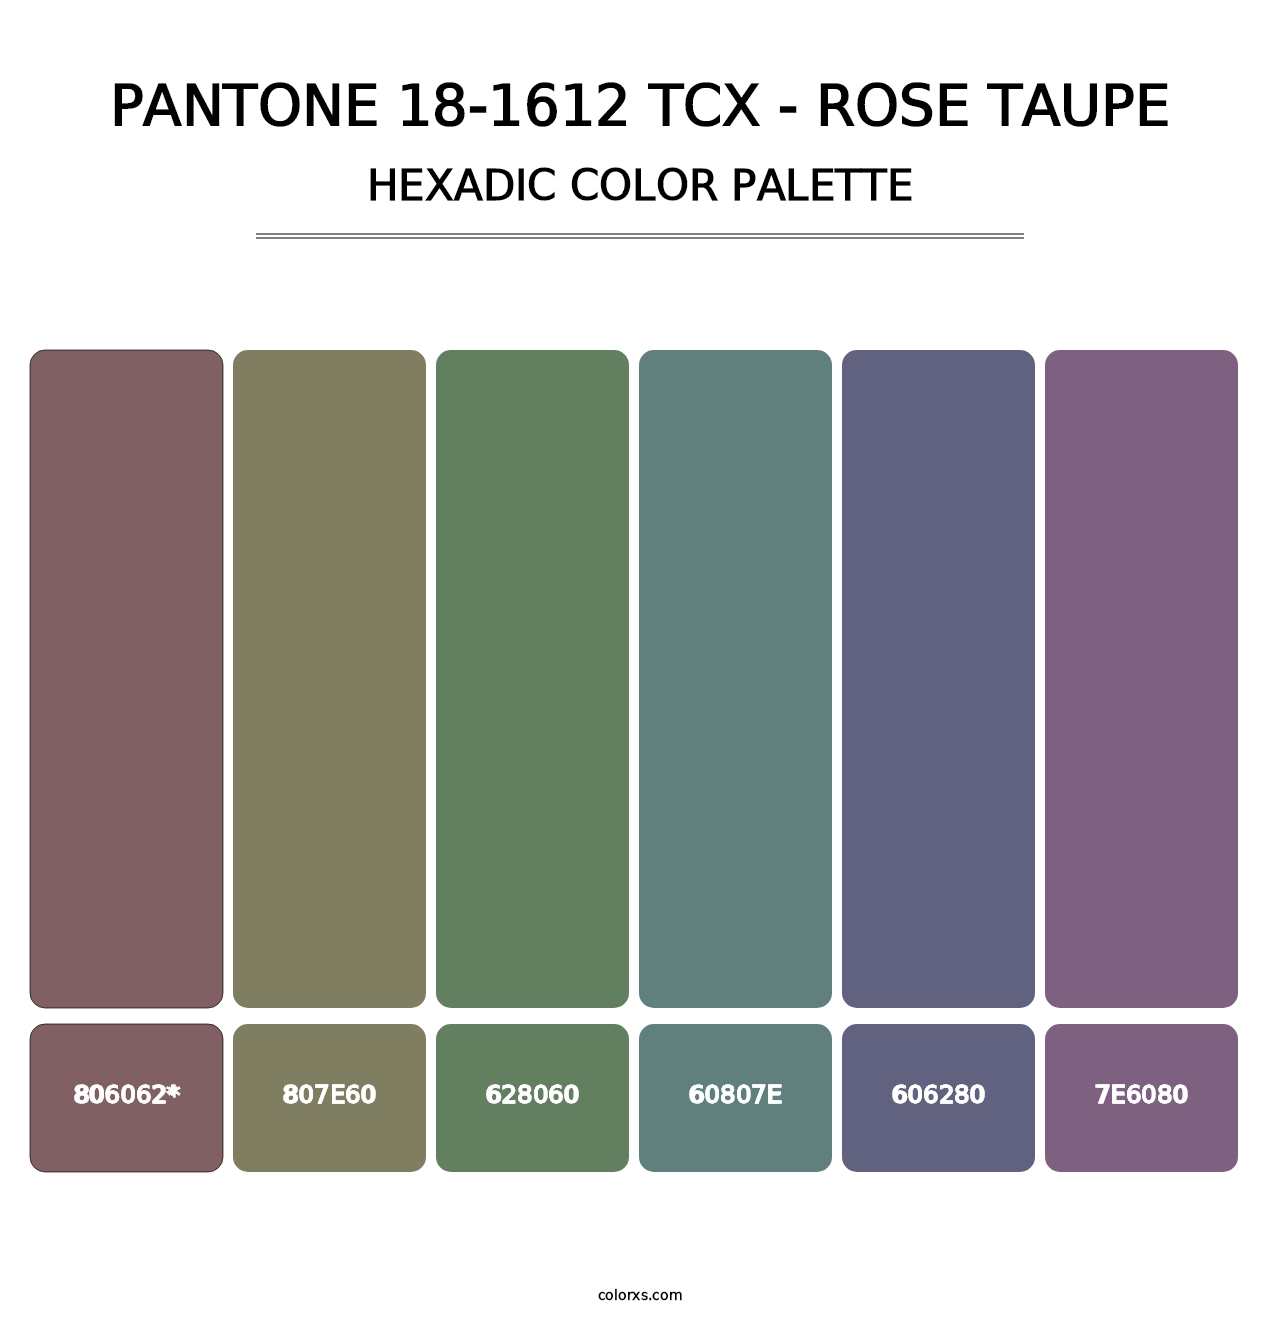 PANTONE 18-1612 TCX - Rose Taupe - Hexadic Color Palette